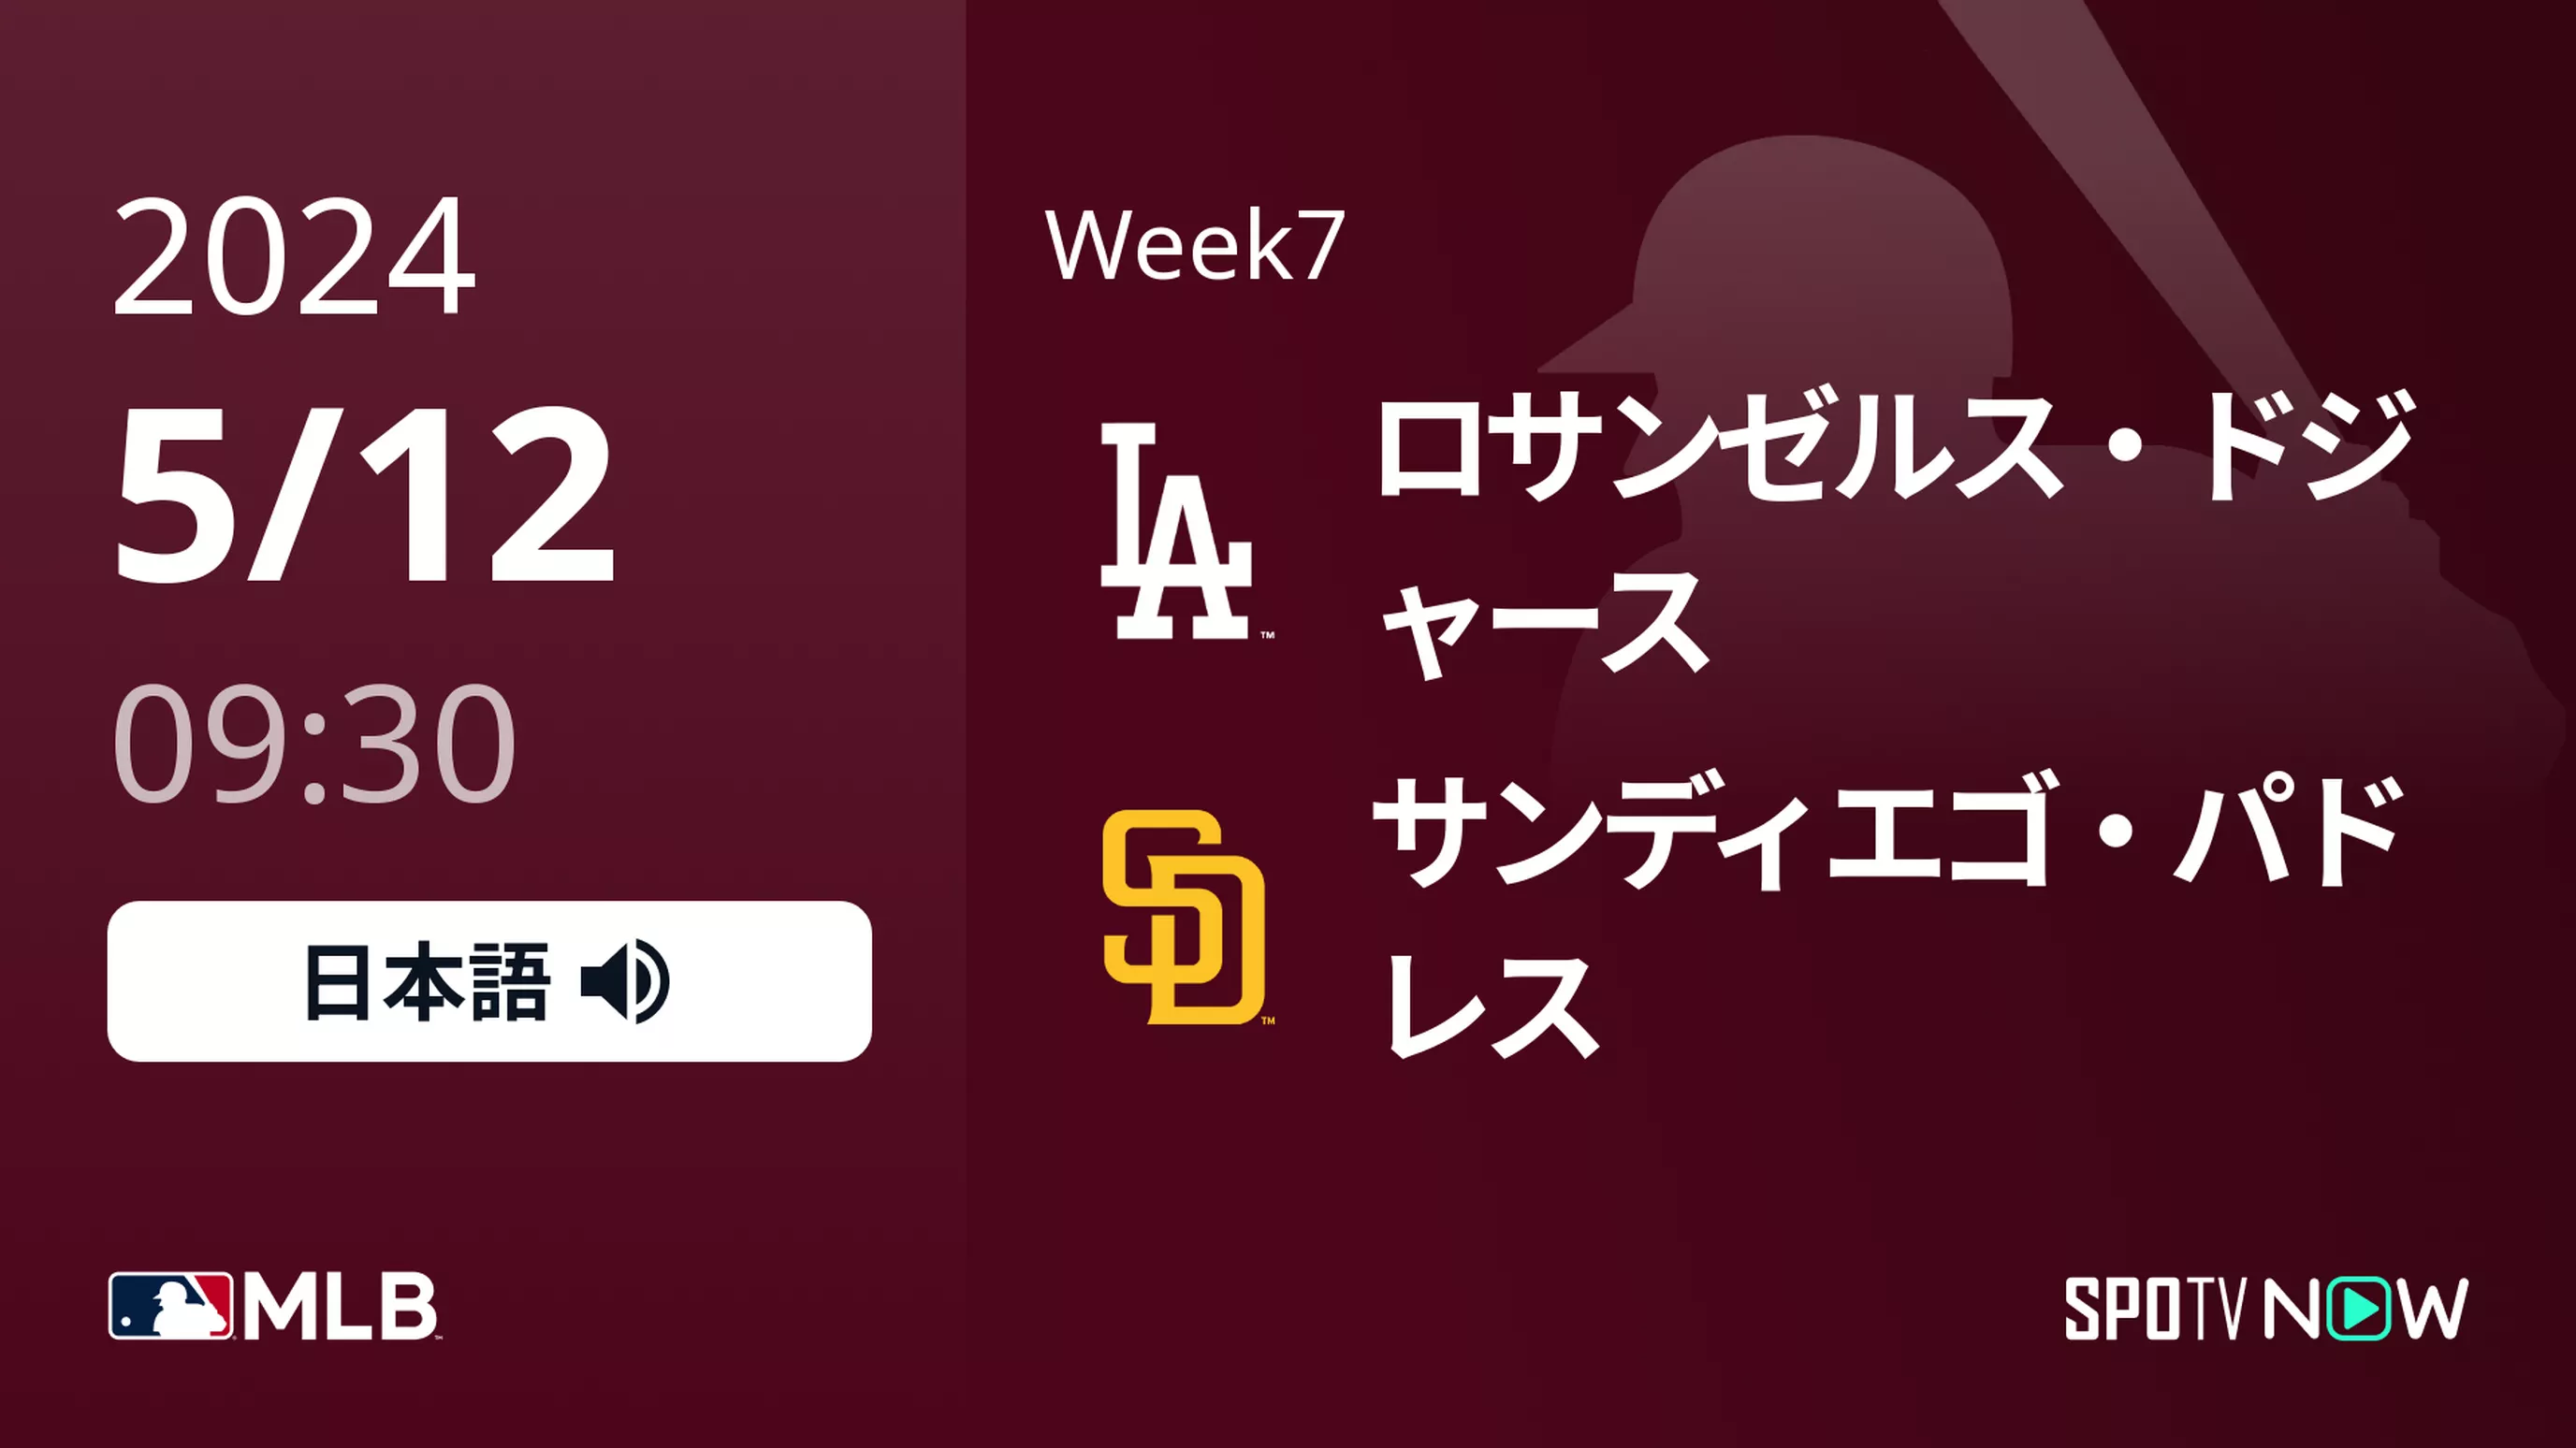 Week7 ドジャース vs パドレス 5/12[MLB]